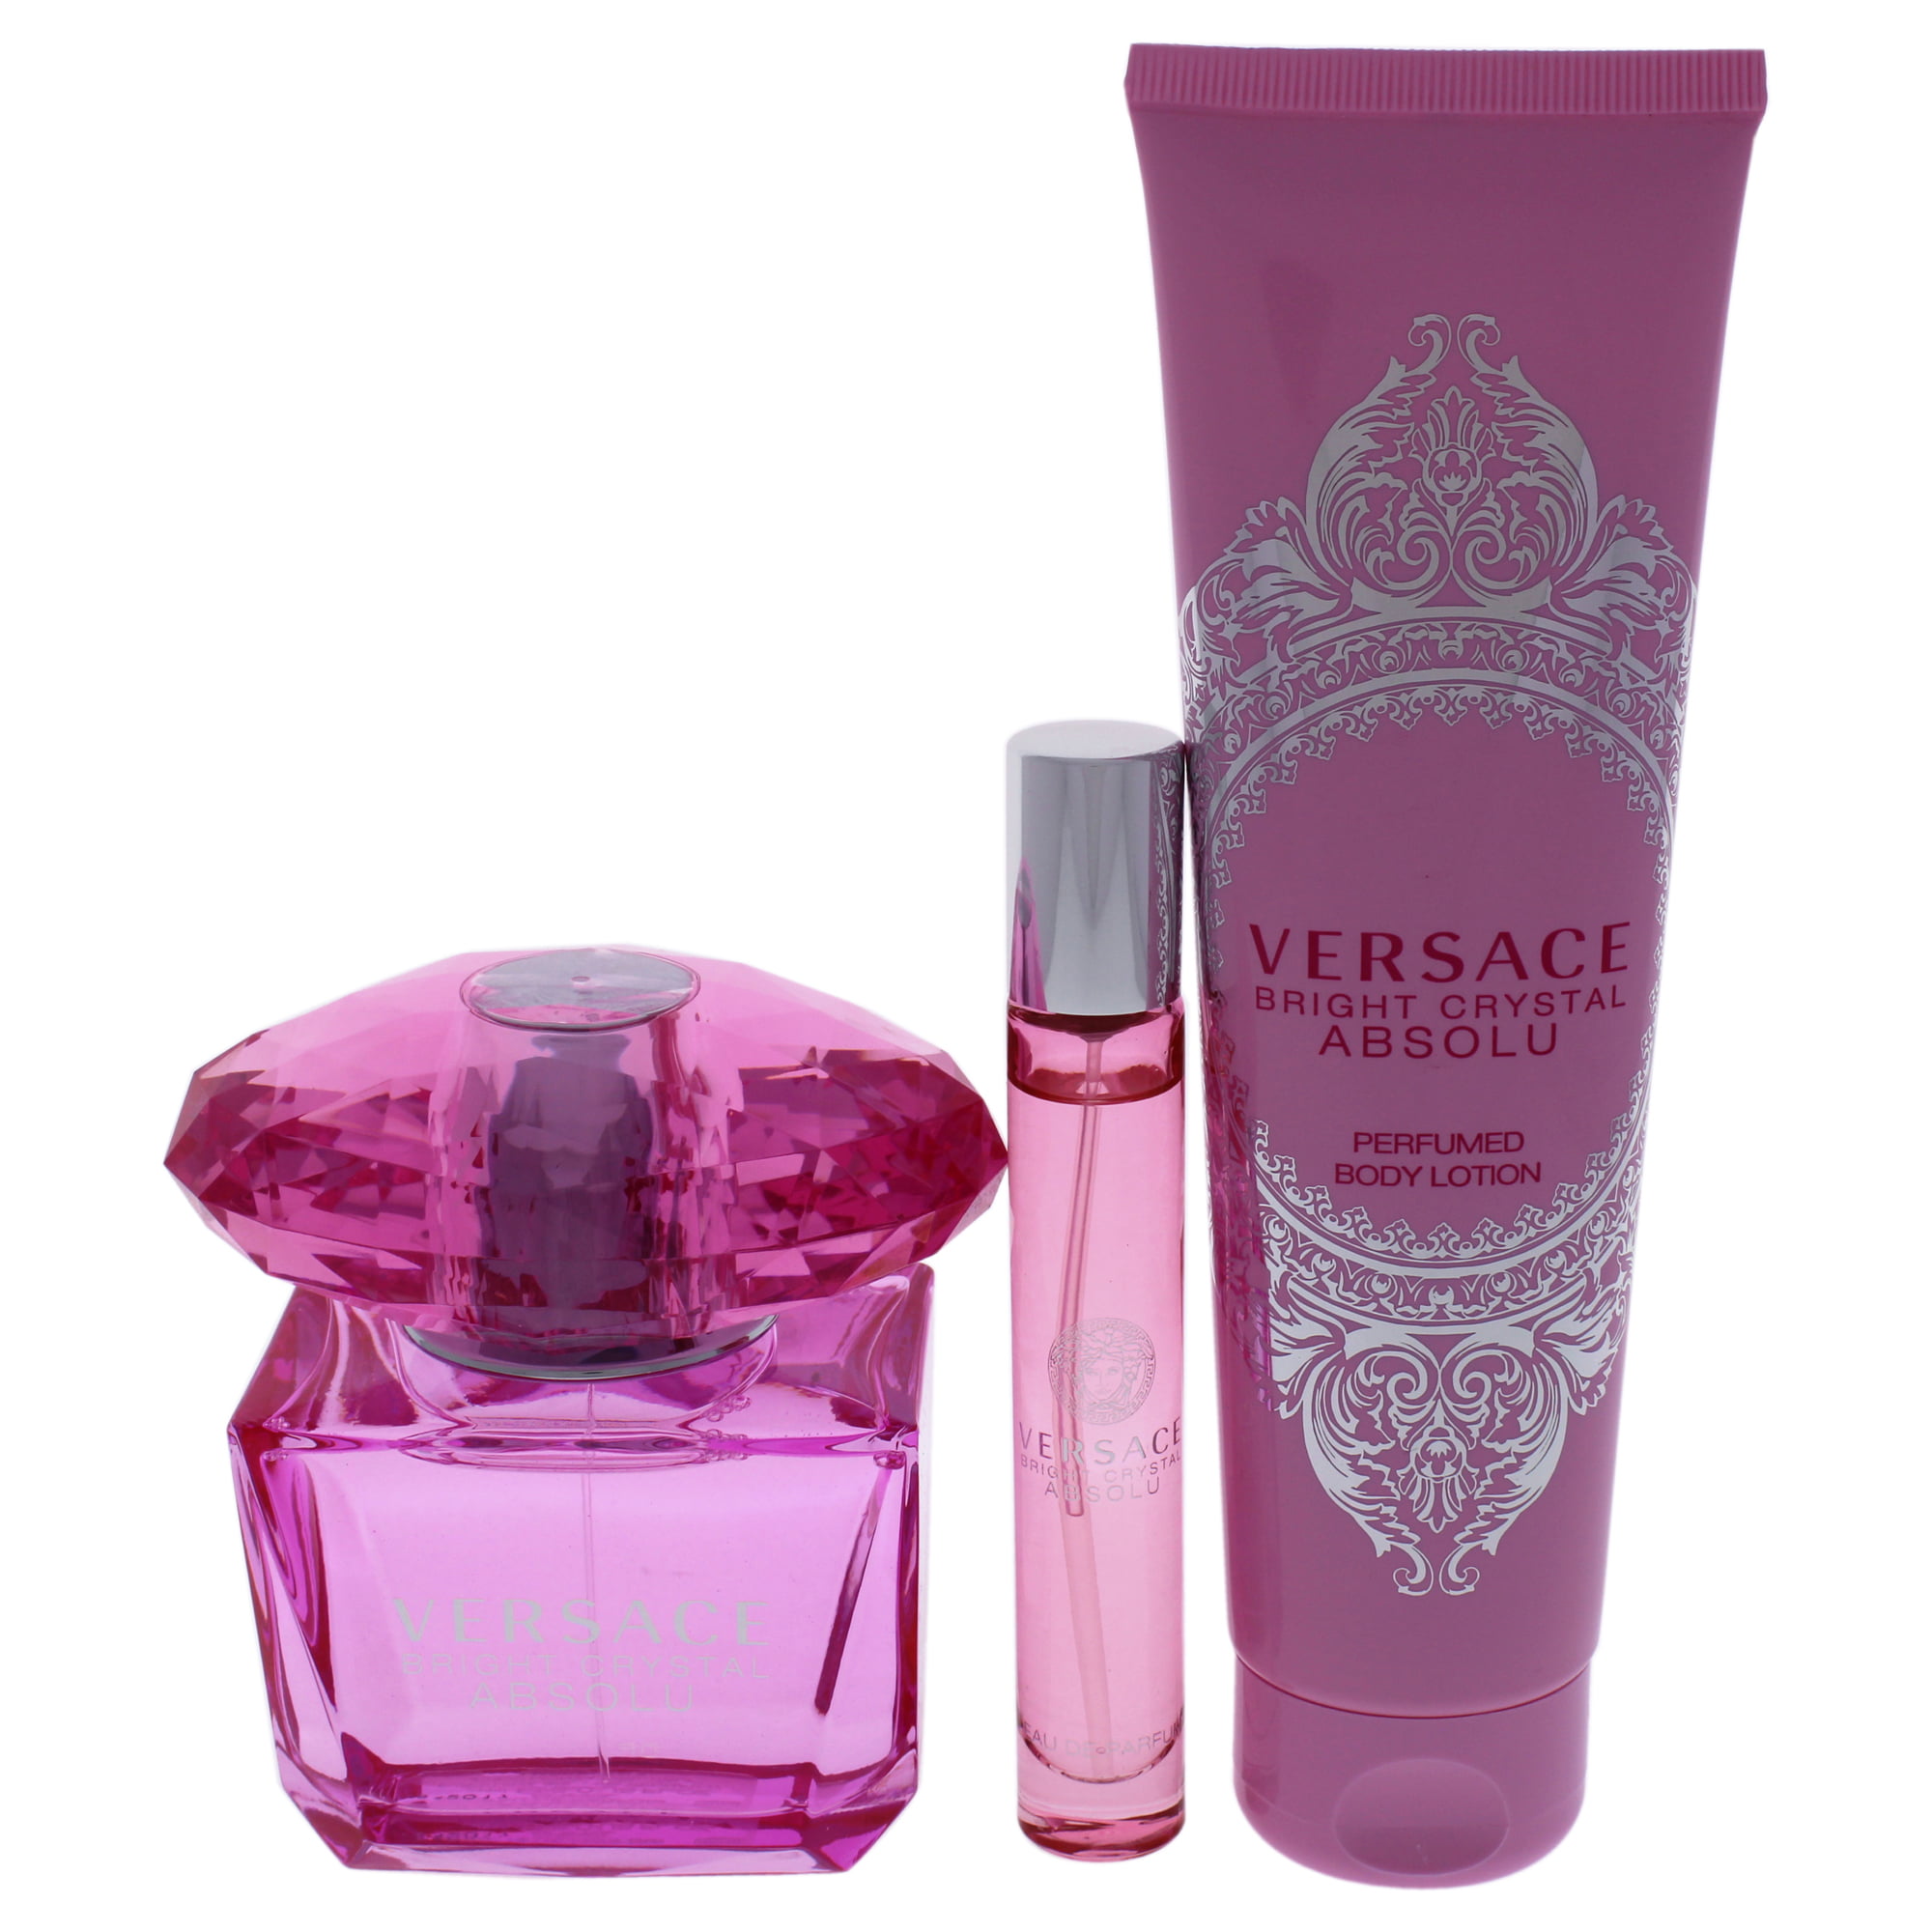 Versace Bright Crystal Gift Set Amazon - Versace Bright Crystal Perfume